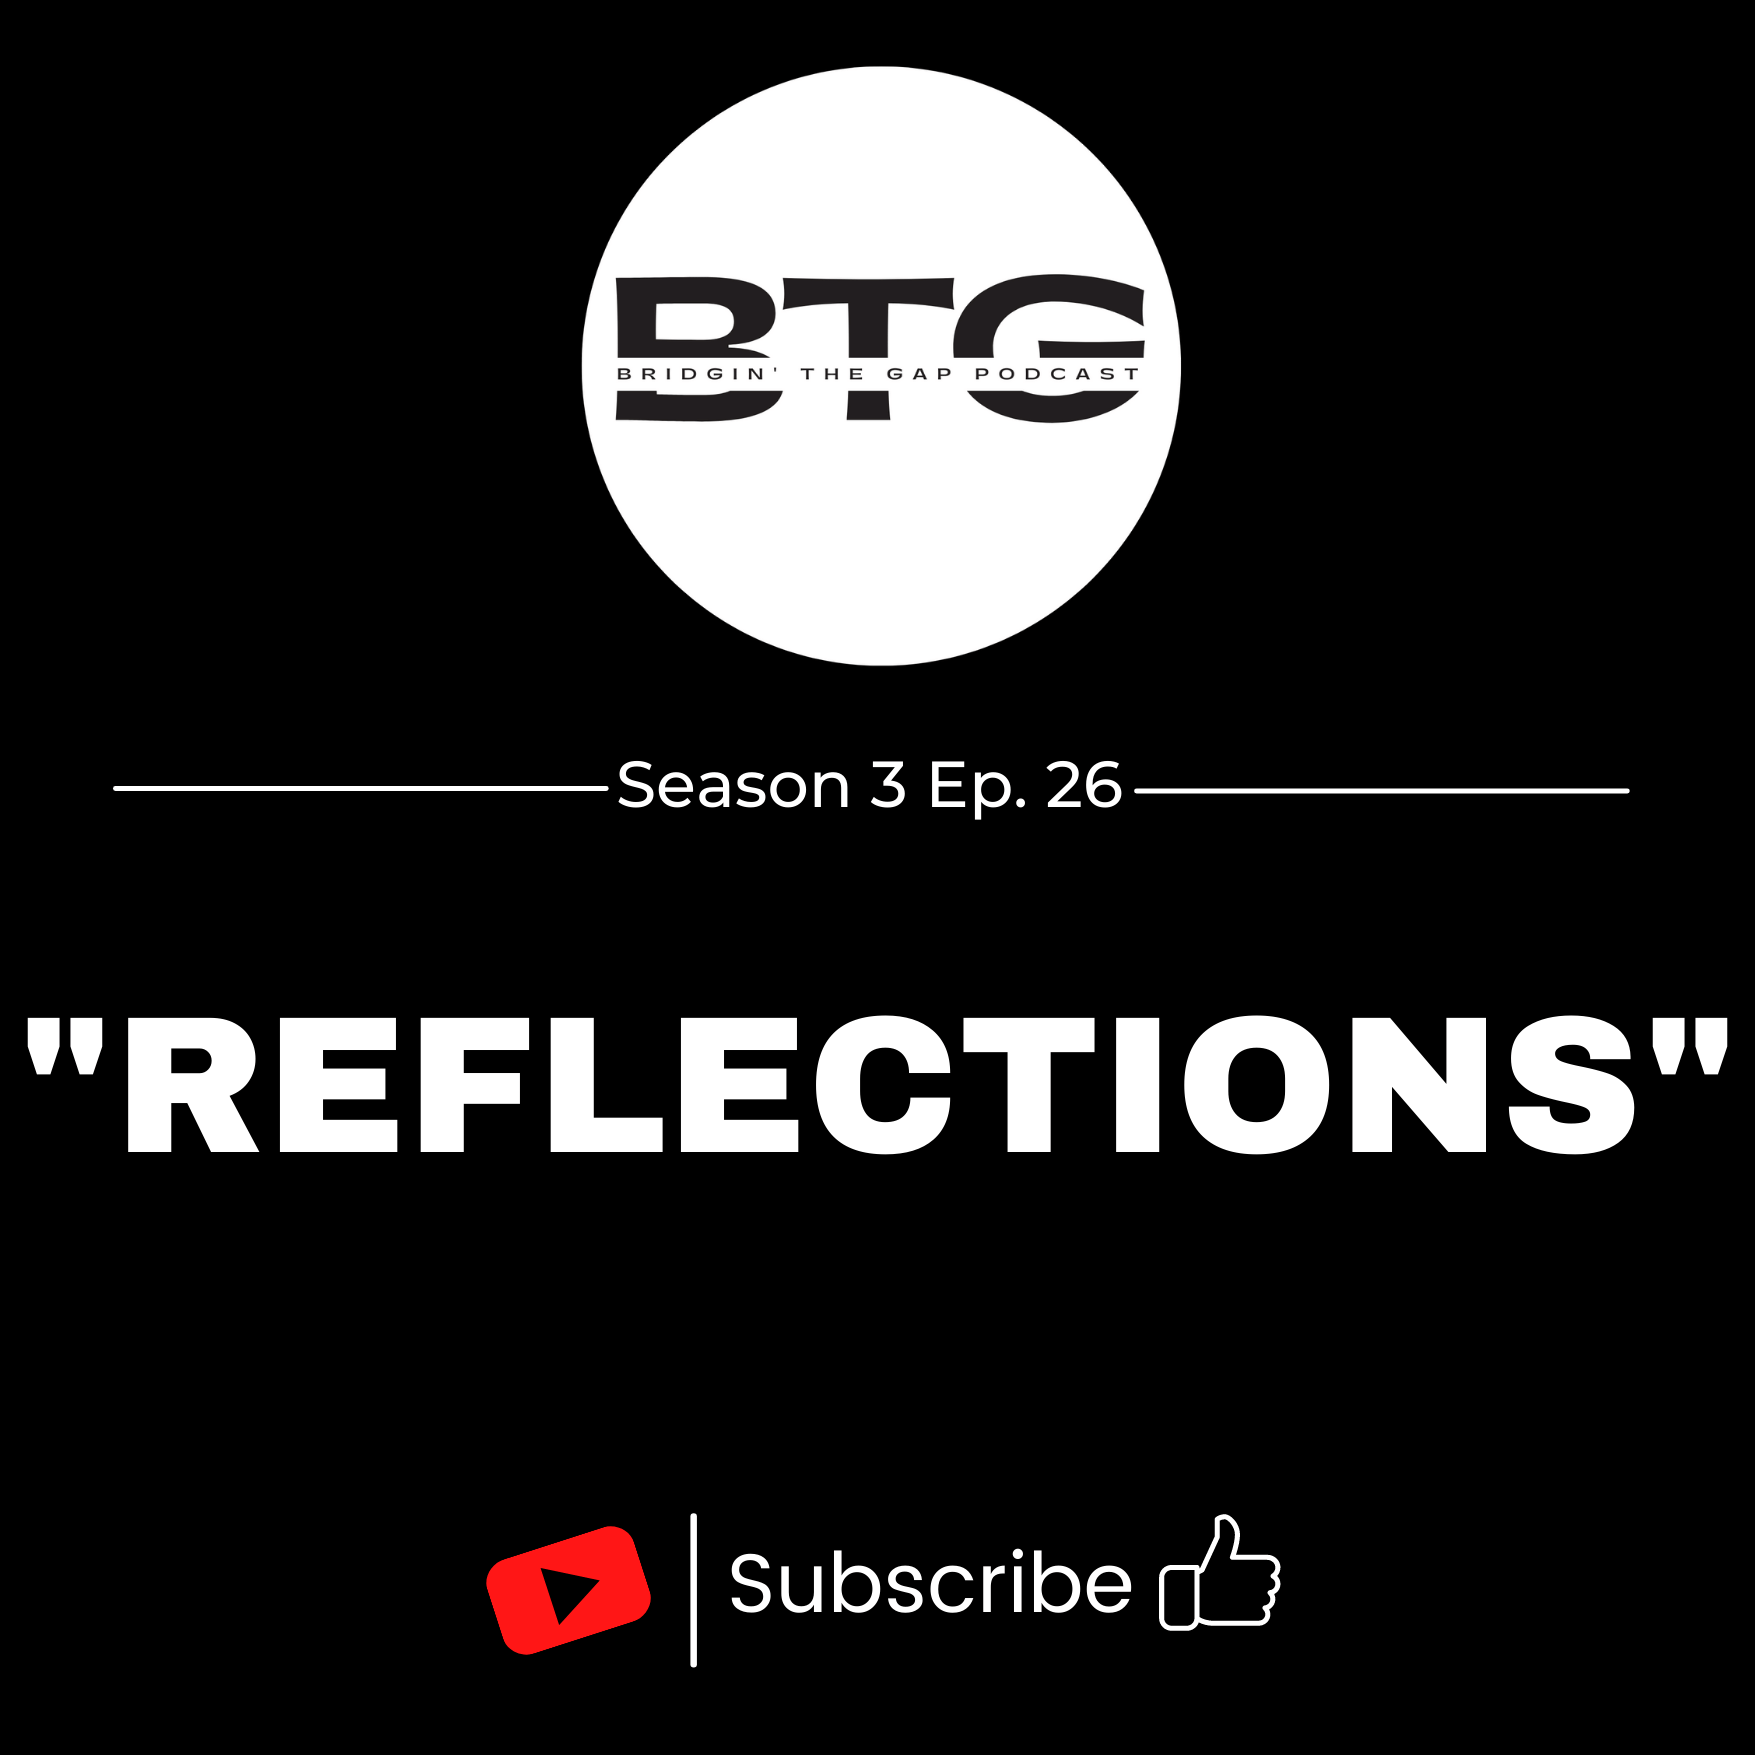 Bridgin The Gap Podcast Season 3. Ep. 26 "Reflections"